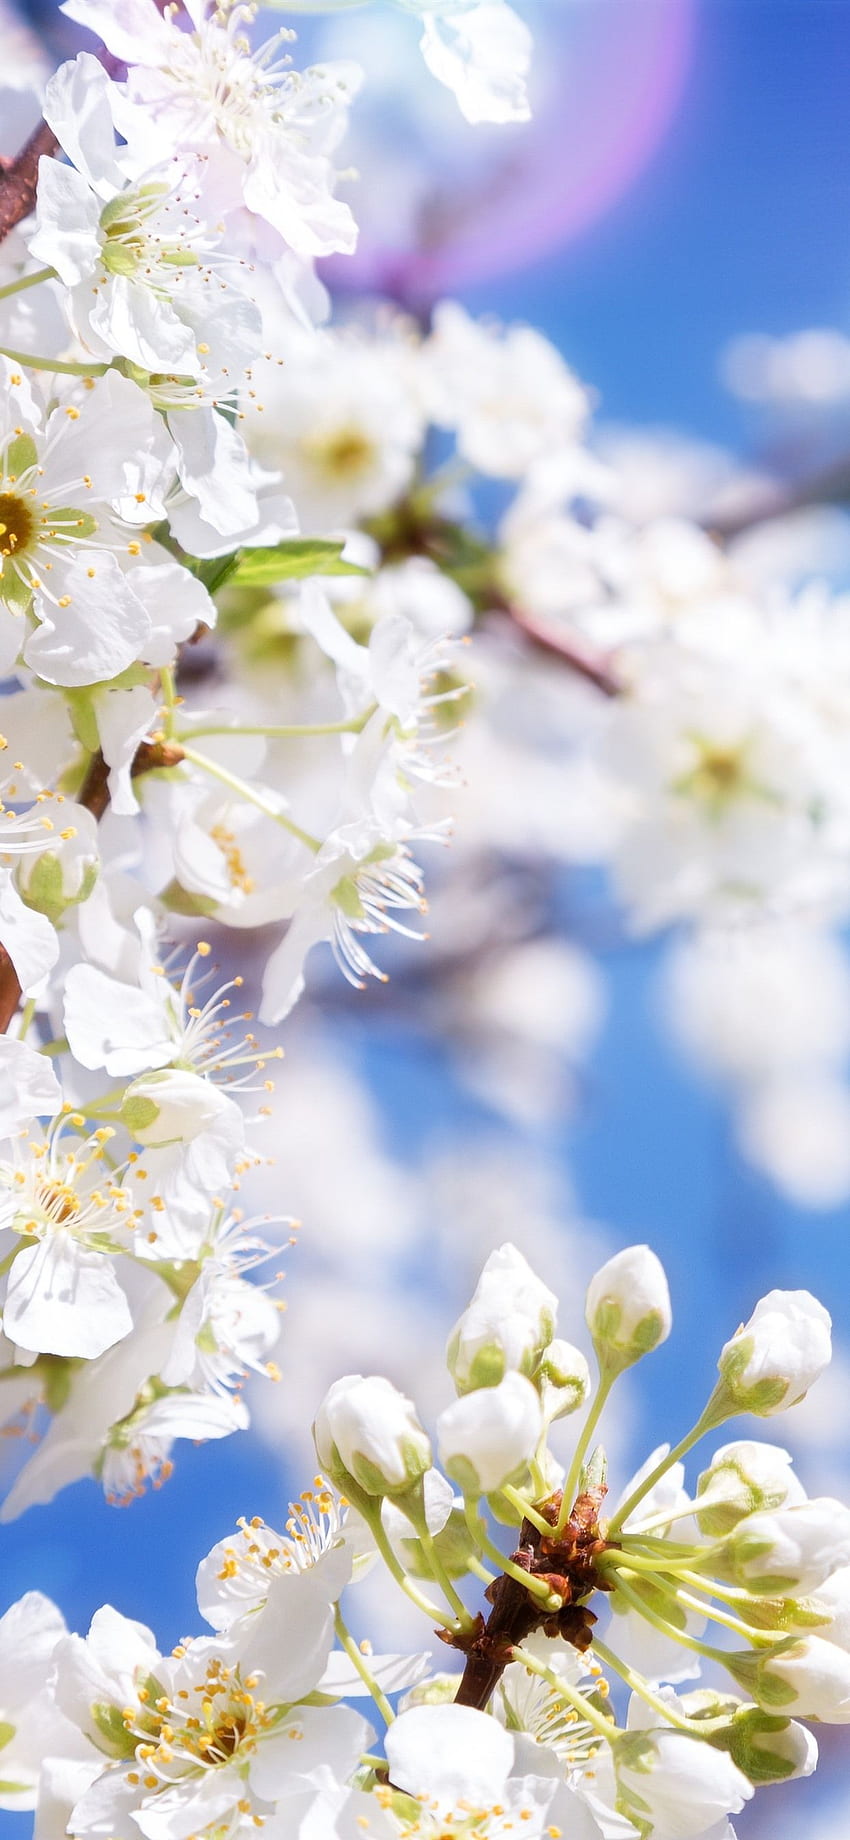 Flores de maçã branca, flor, primavera, raios solares IPhone 11 Pro XS Max, plano de fundo, flores azuis da primavera Papel de parede de celular HD